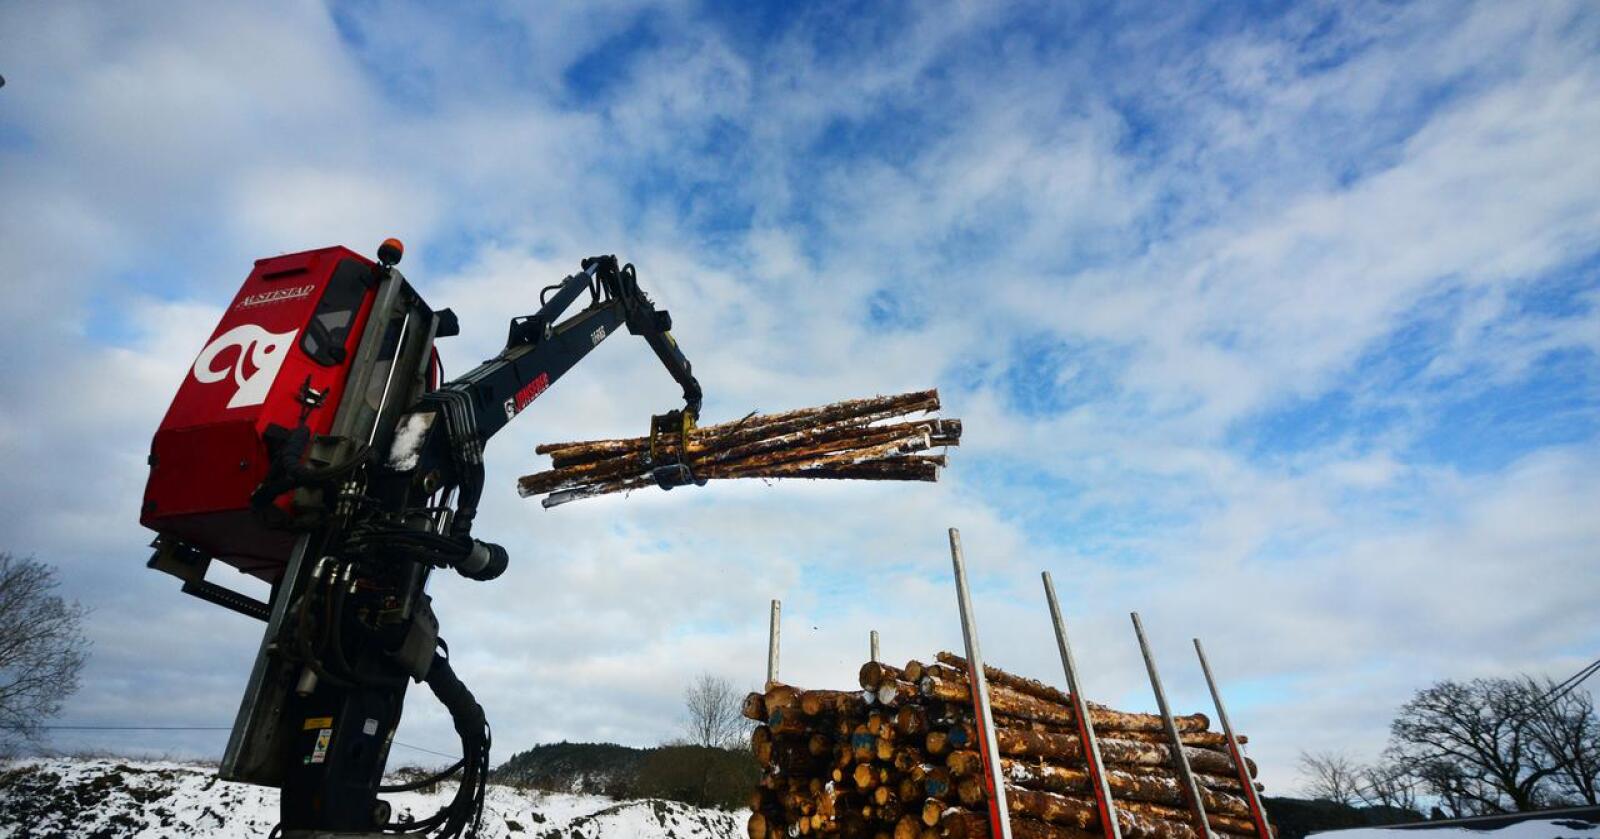 Nye tall viser kraftig vekst for norsk tømmerhogst. Foto: Siri Juell Rasmussen